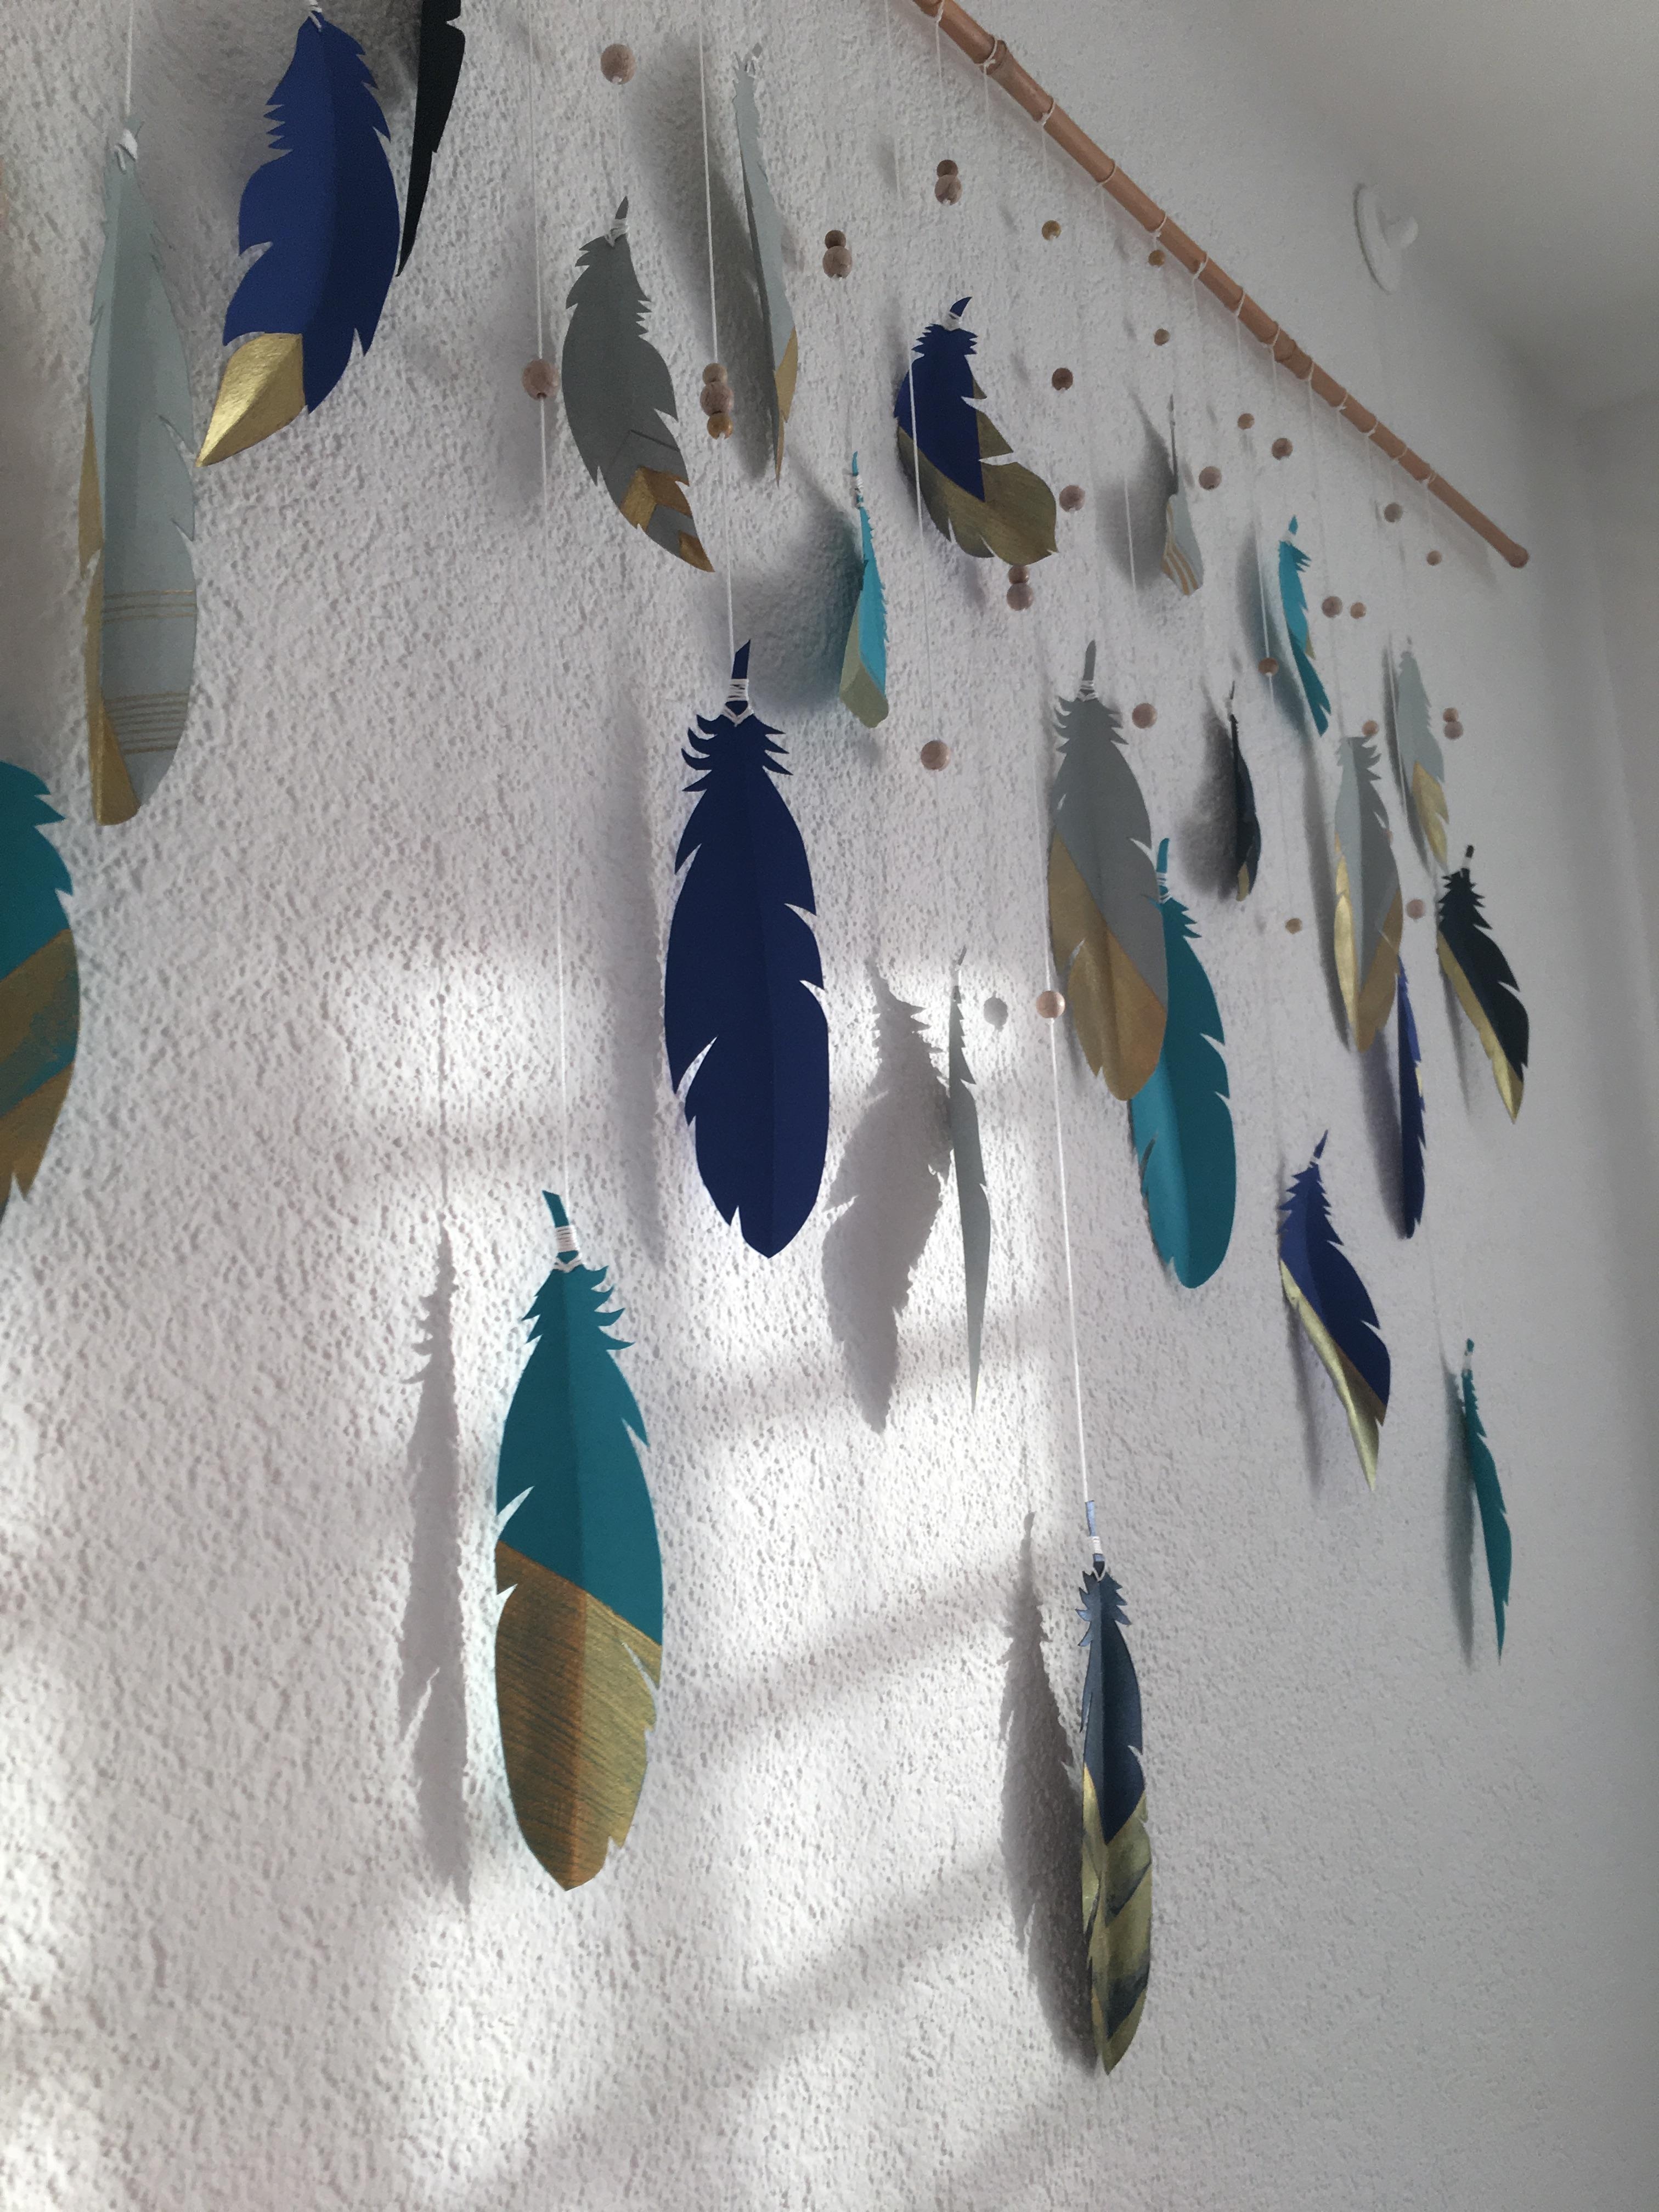 #livingchallenge #wandgestaltung

Dieser individuelle Wandbehang verschönert mein Arbeits-Gäste-Kreativ-Ankleidezimmer